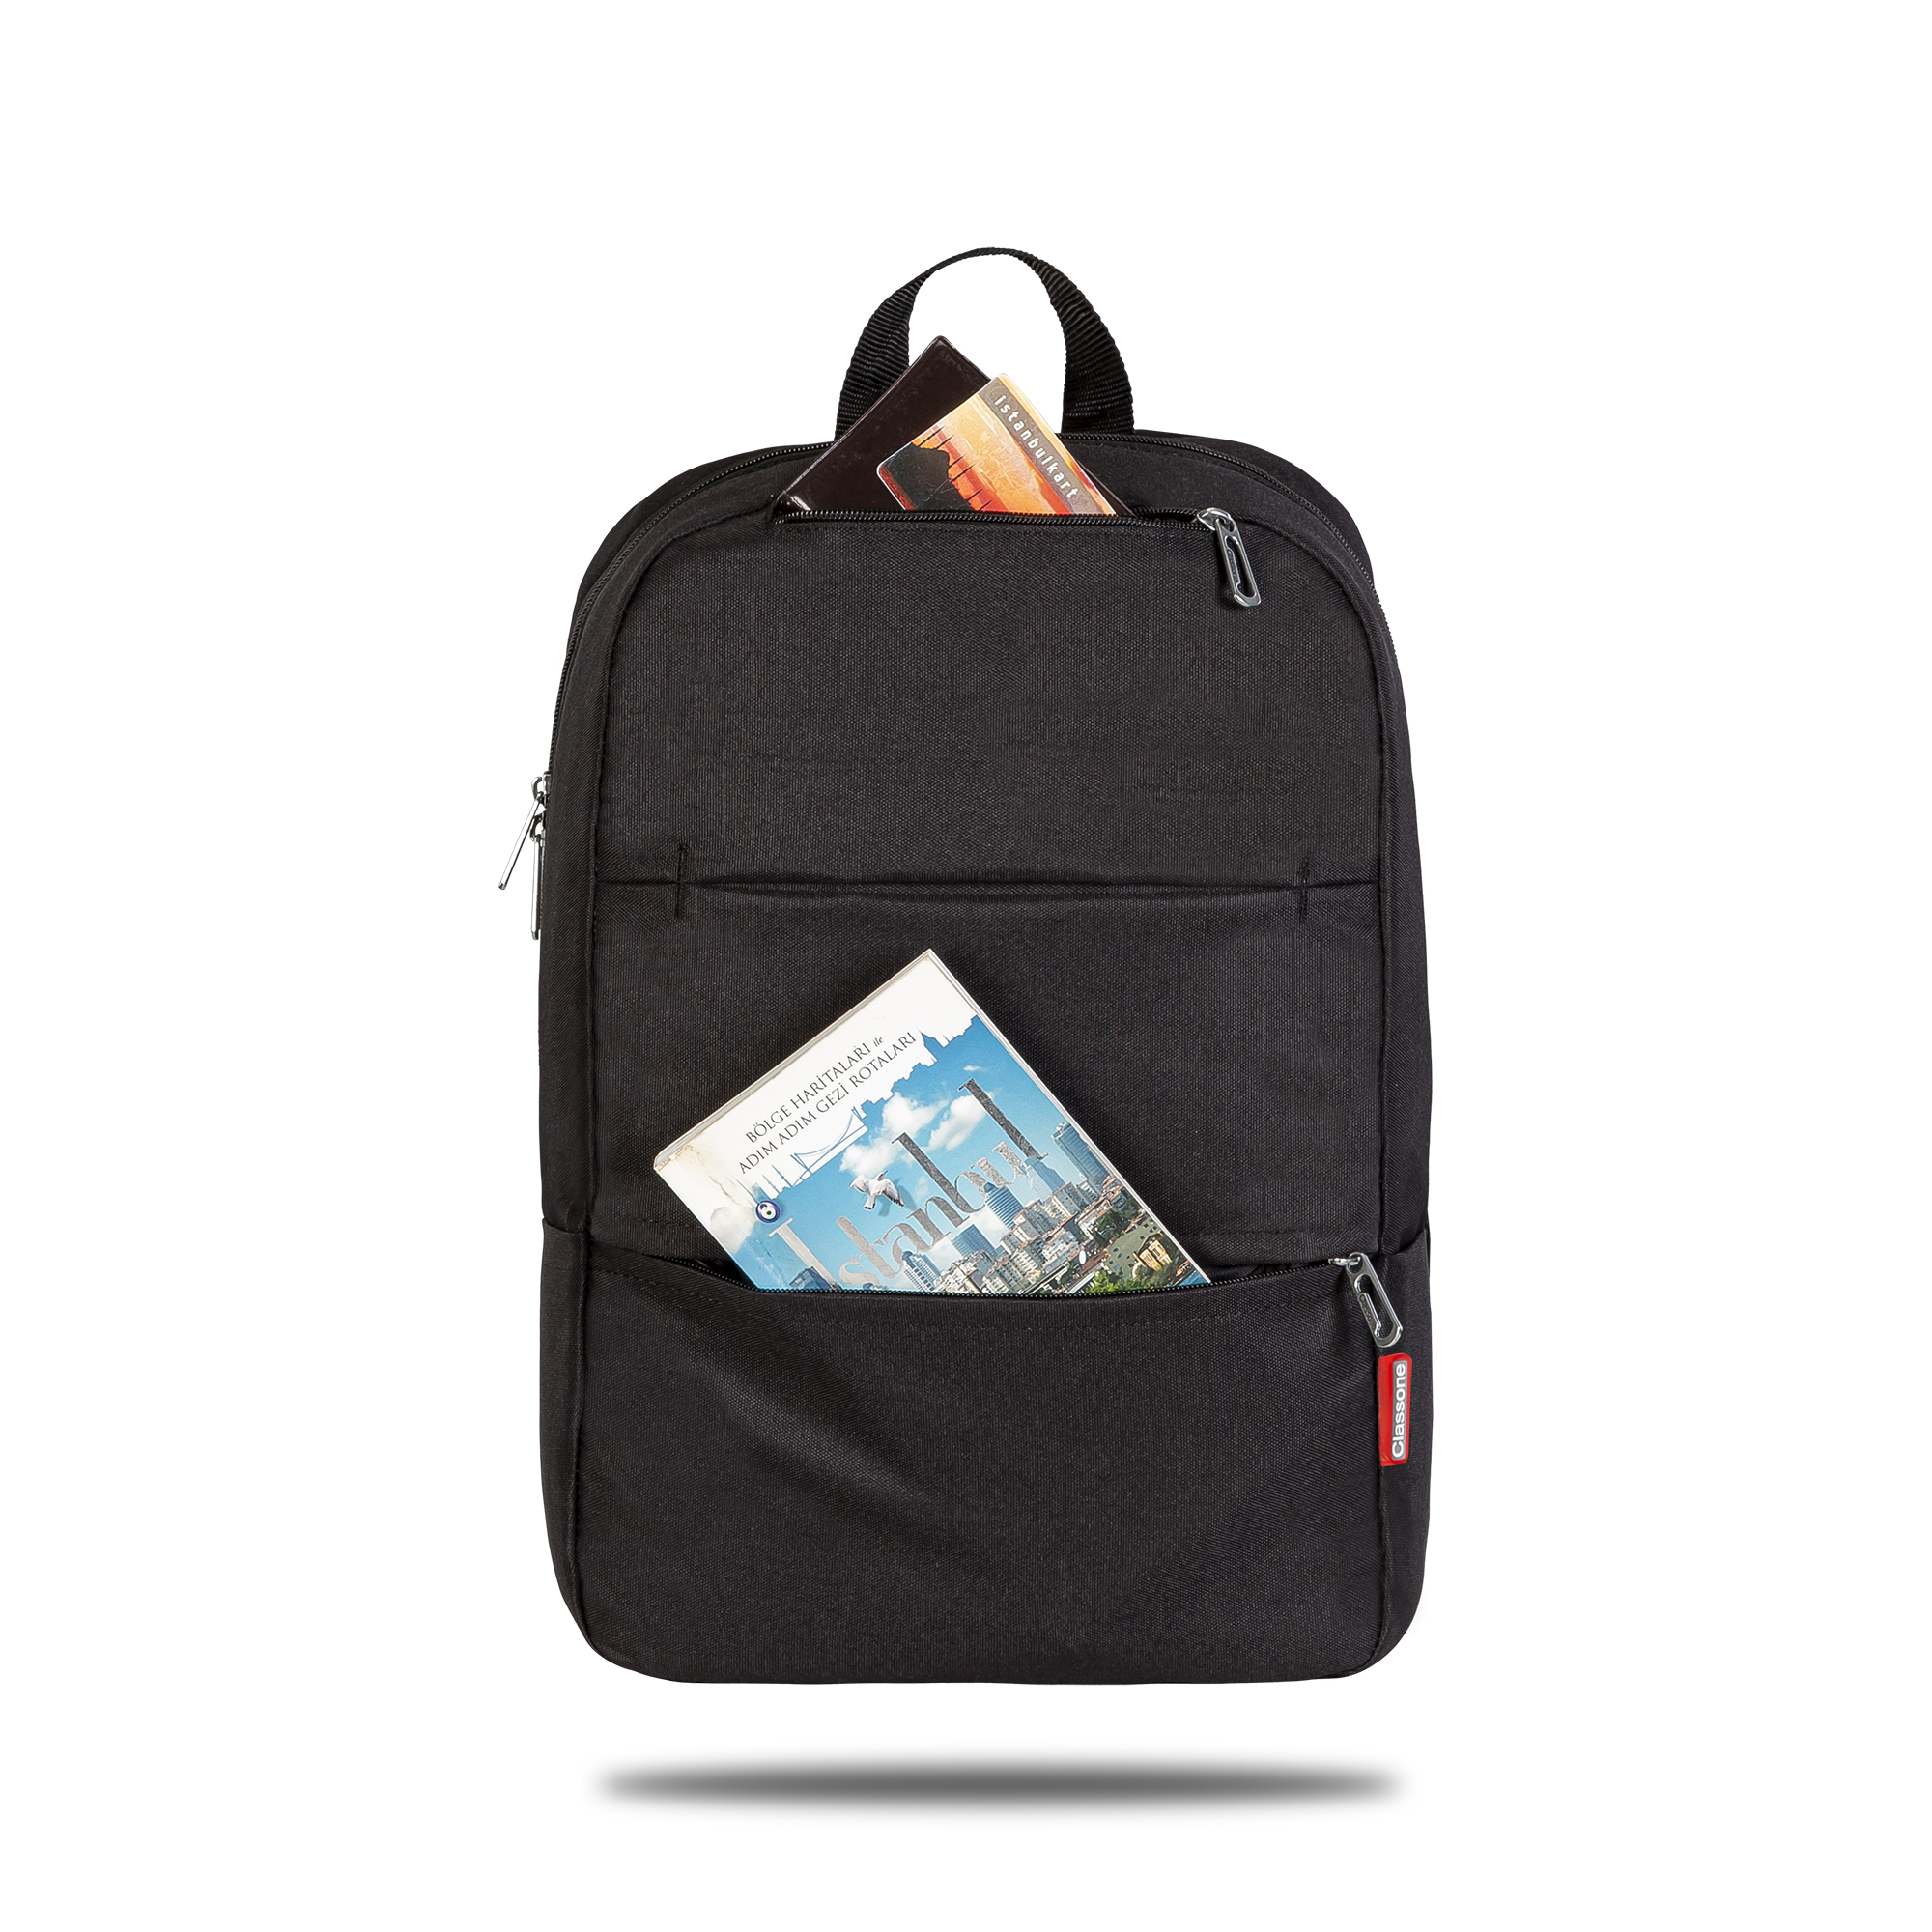 Classone PR-C1600 Casetto Series  WTXpro Waterproof Fabric 15.6 Laptop Backpack - Black